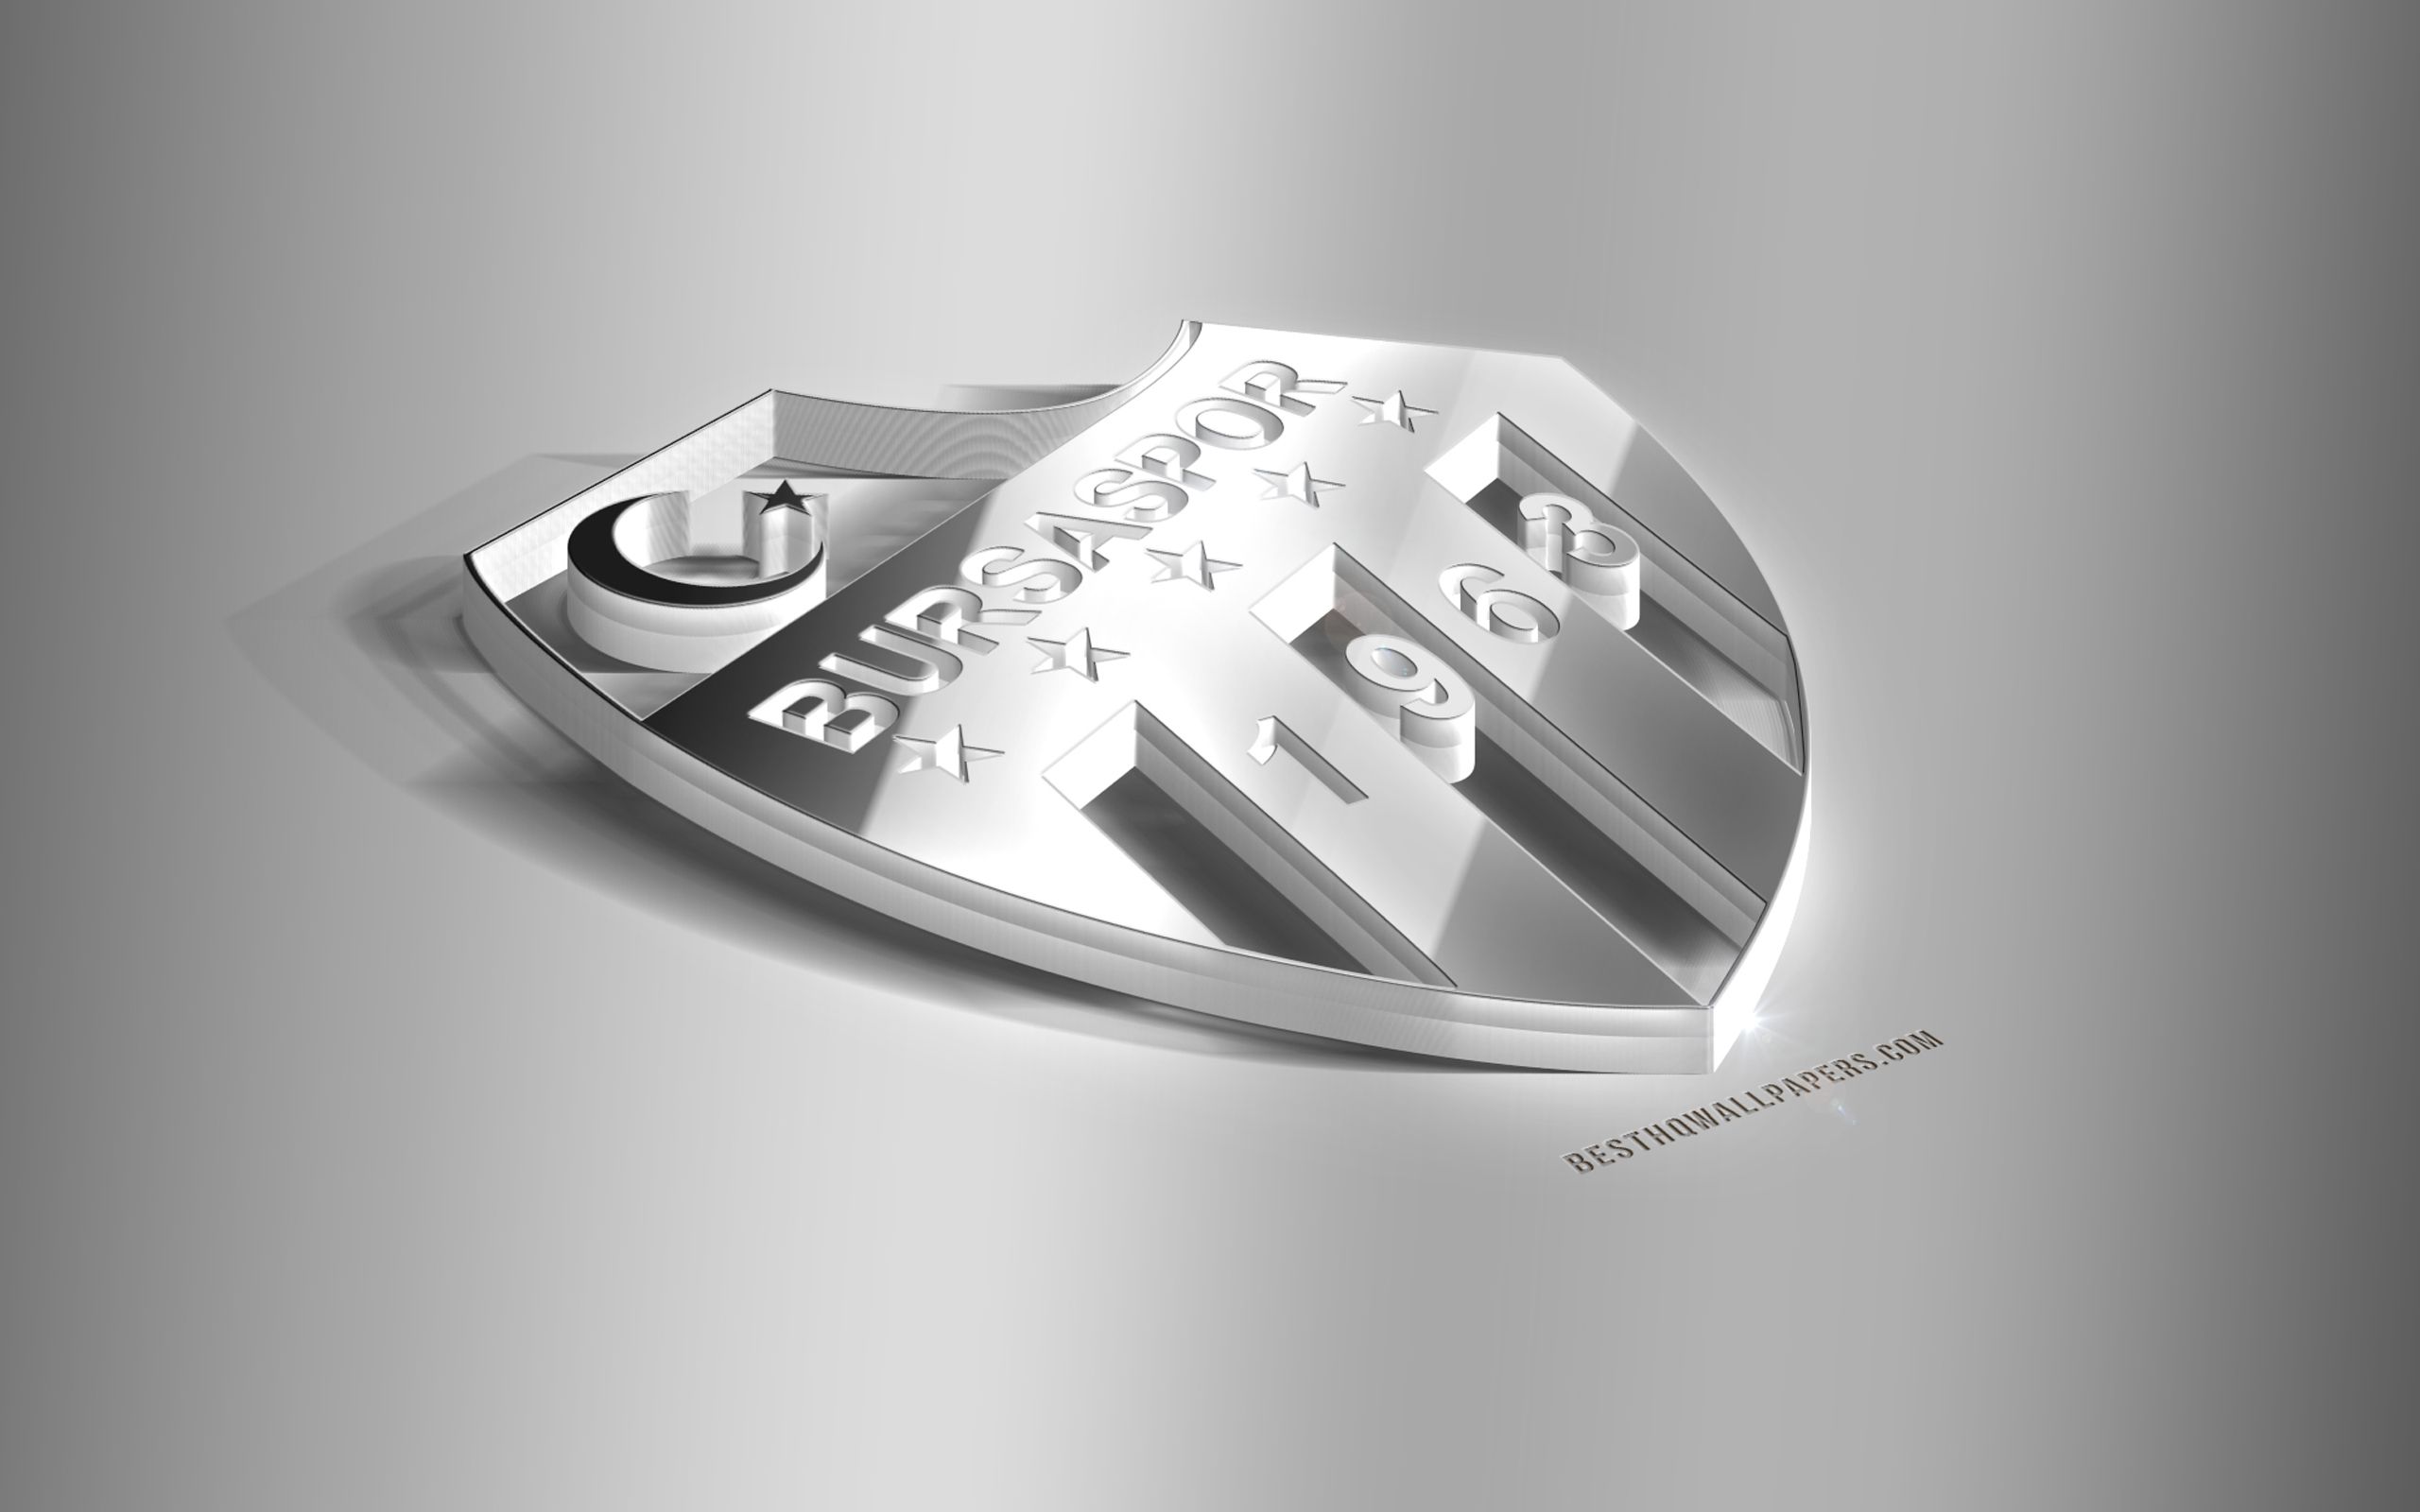 Download wallpaper Bursaspor, 3D steel logo, Turkish football club, 3D emblem, Bursa, Turkey, Bursaspor metal emblem, Super Lig, football, creative 3D art for desktop with resolution 2560x1600. High Quality HD picture wallpaper